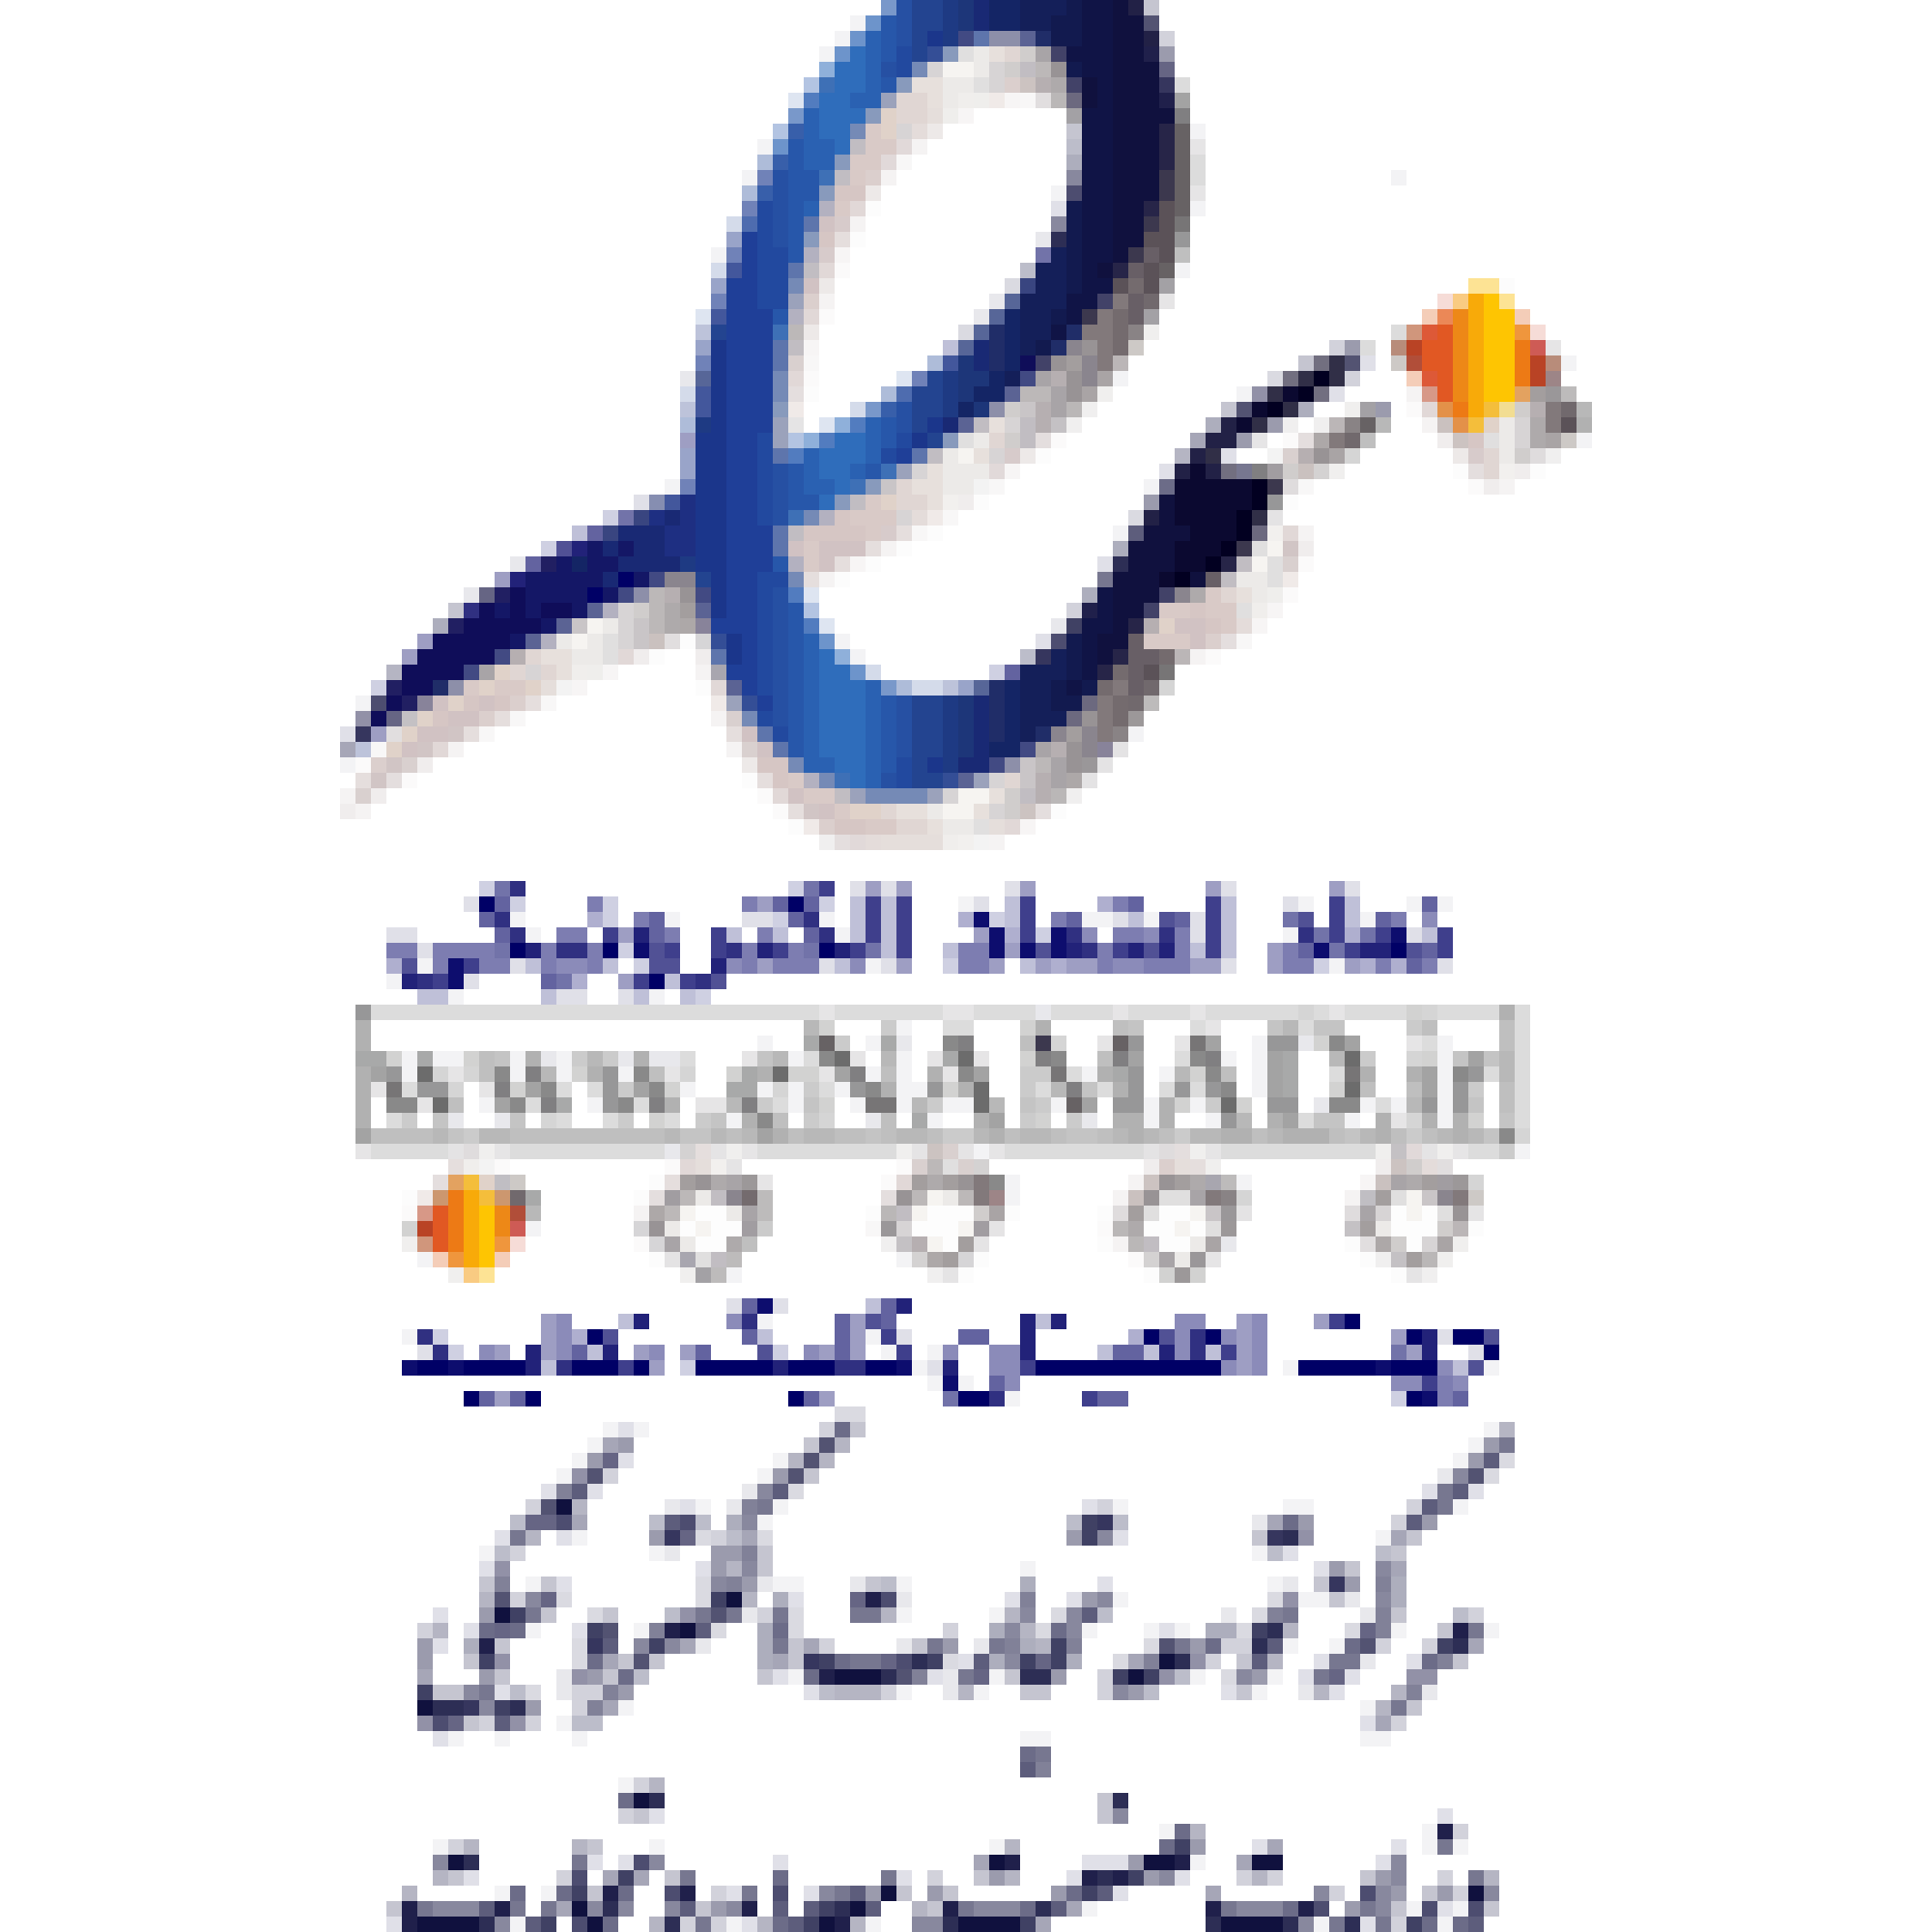 enamad-logo